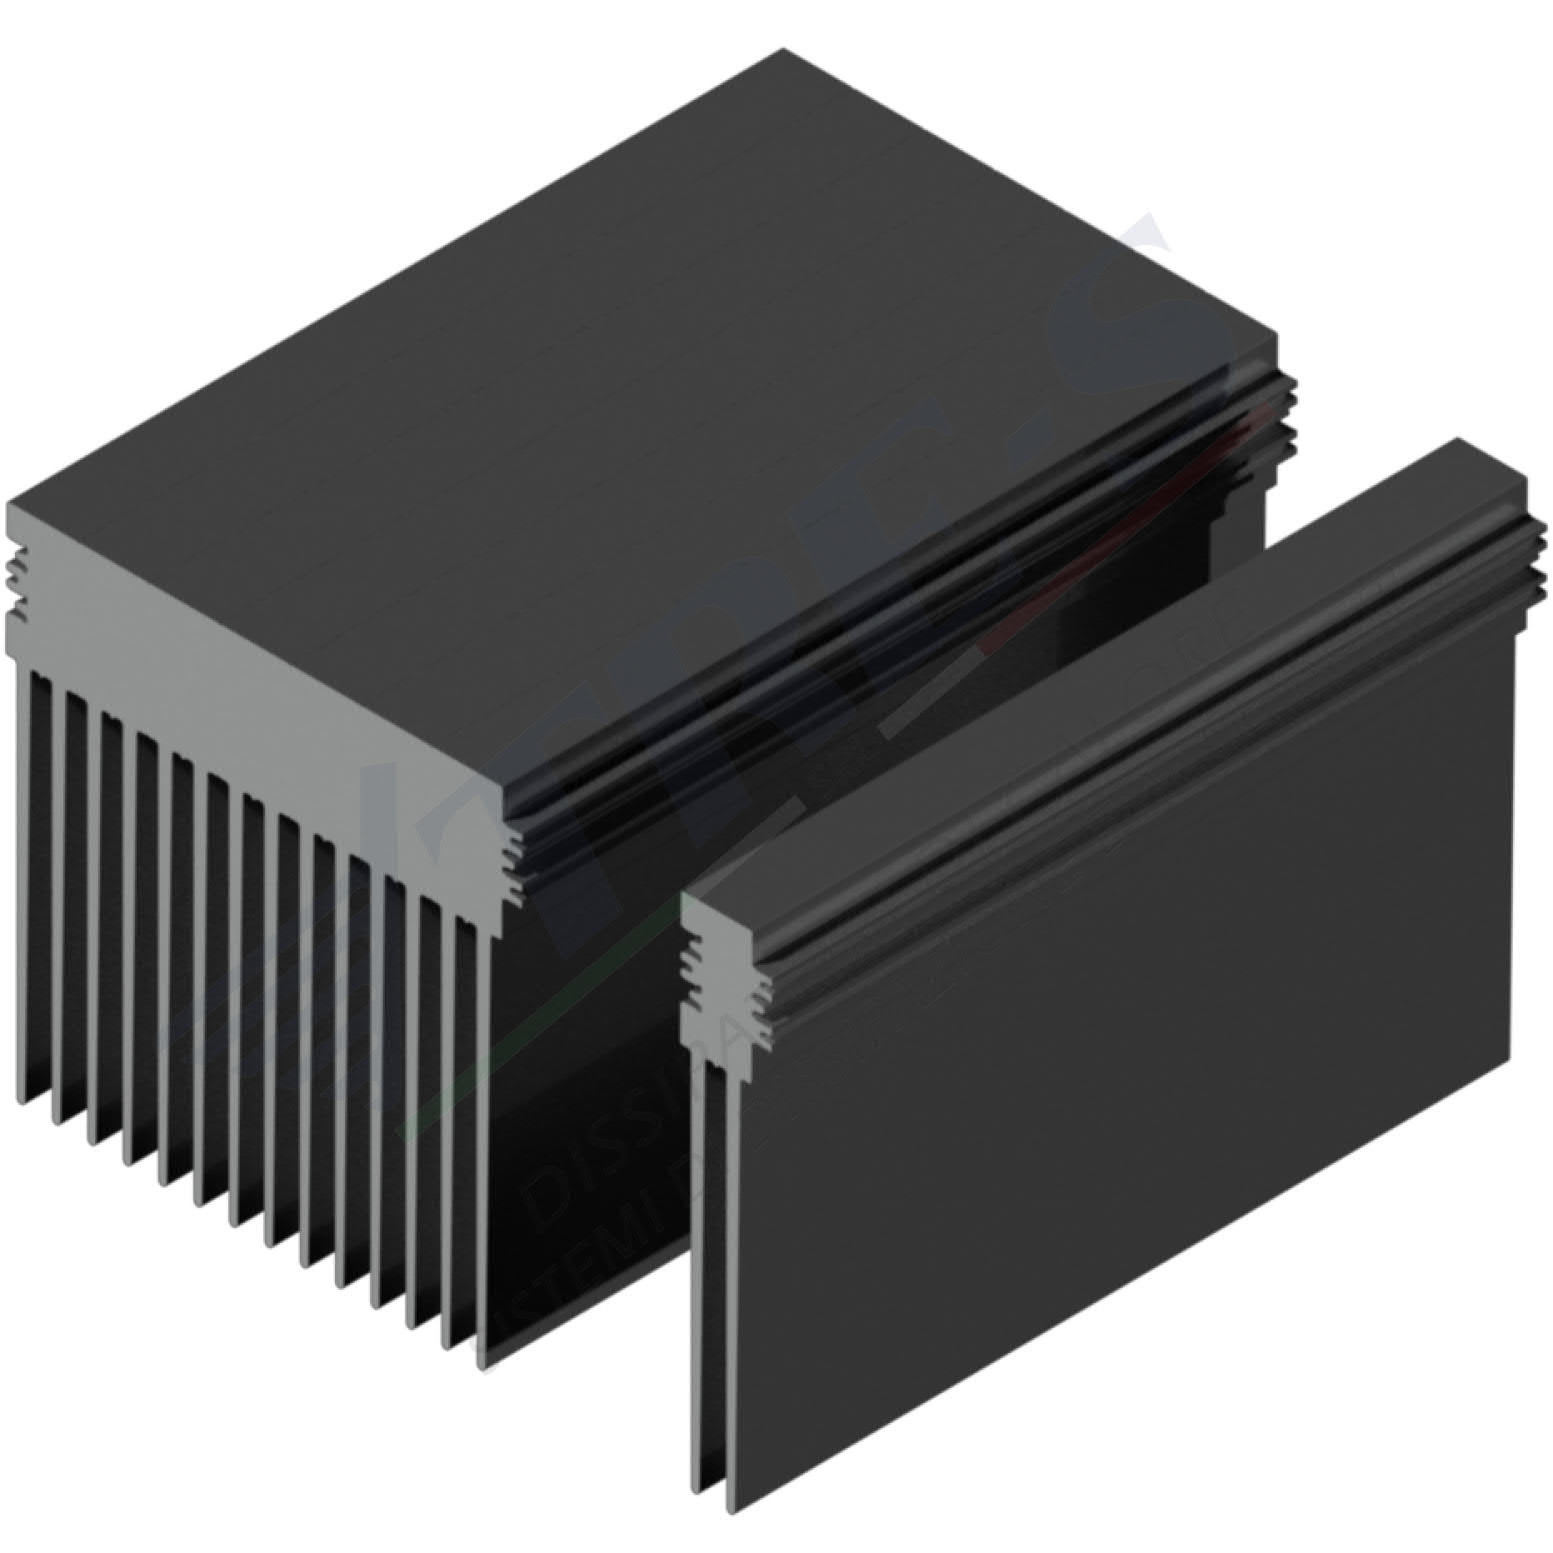 PRI1032 - Embedded heat sinks